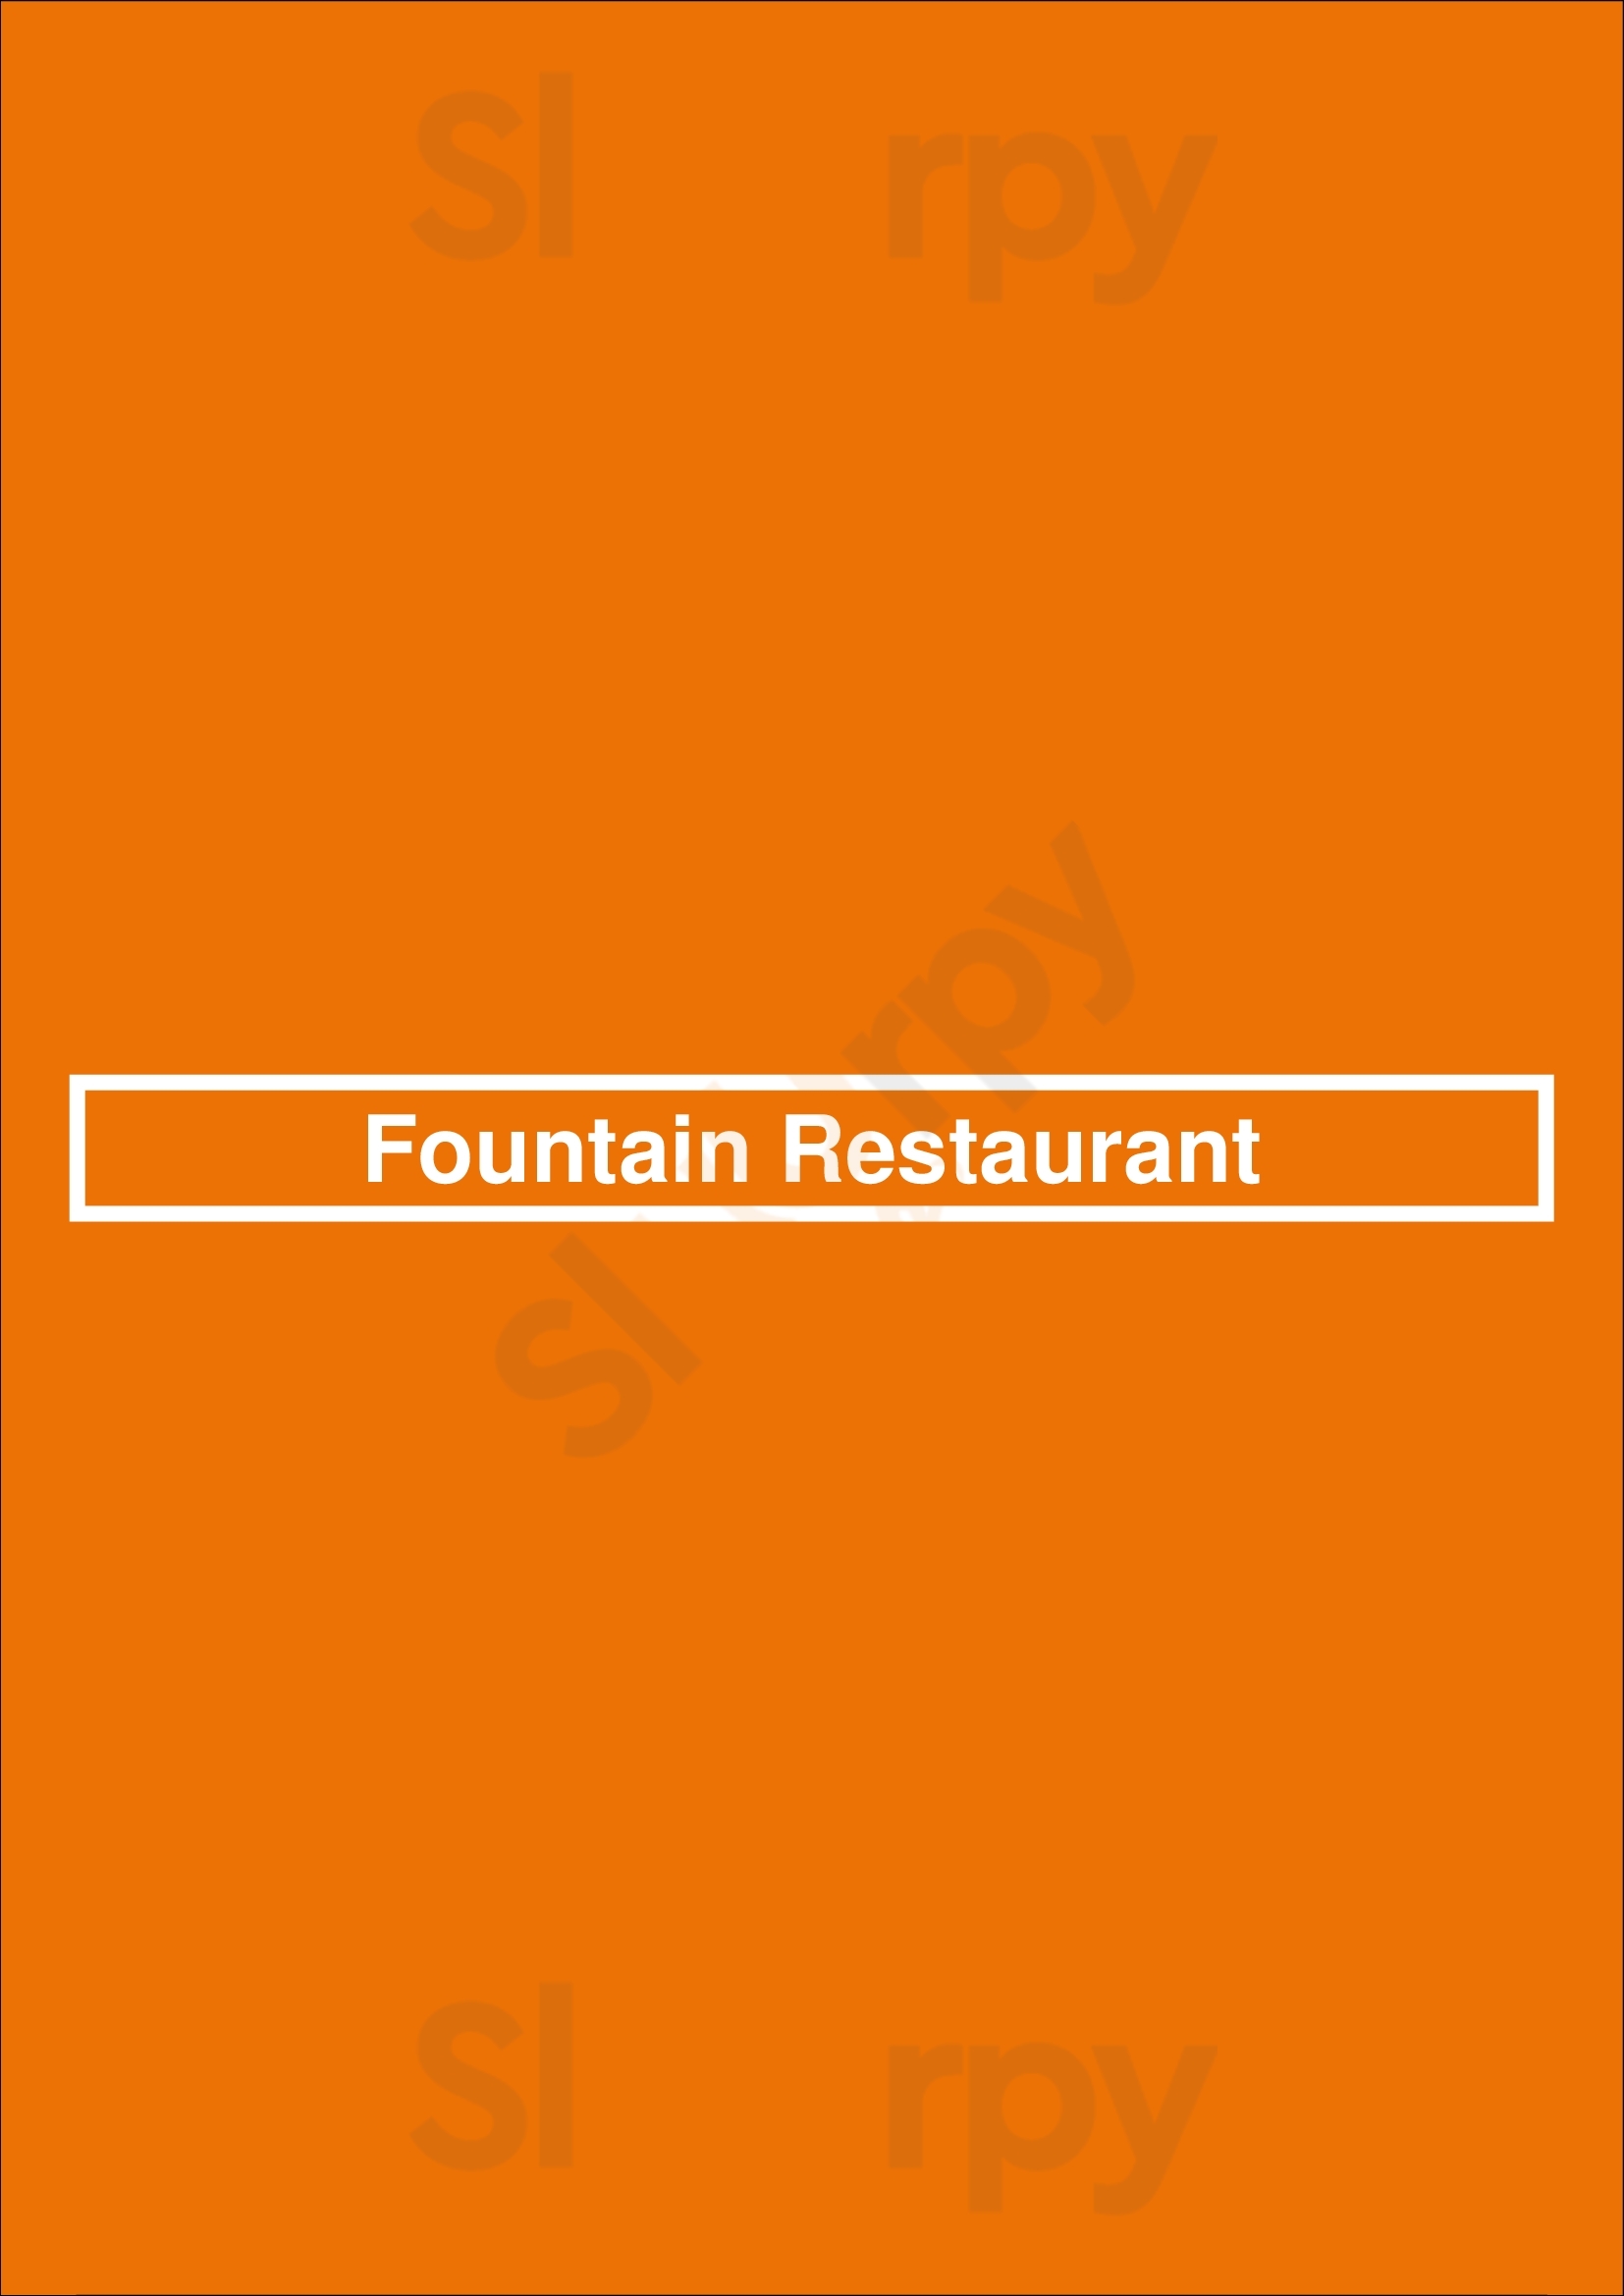 Fountain Restaurant San Jose Menu - 1